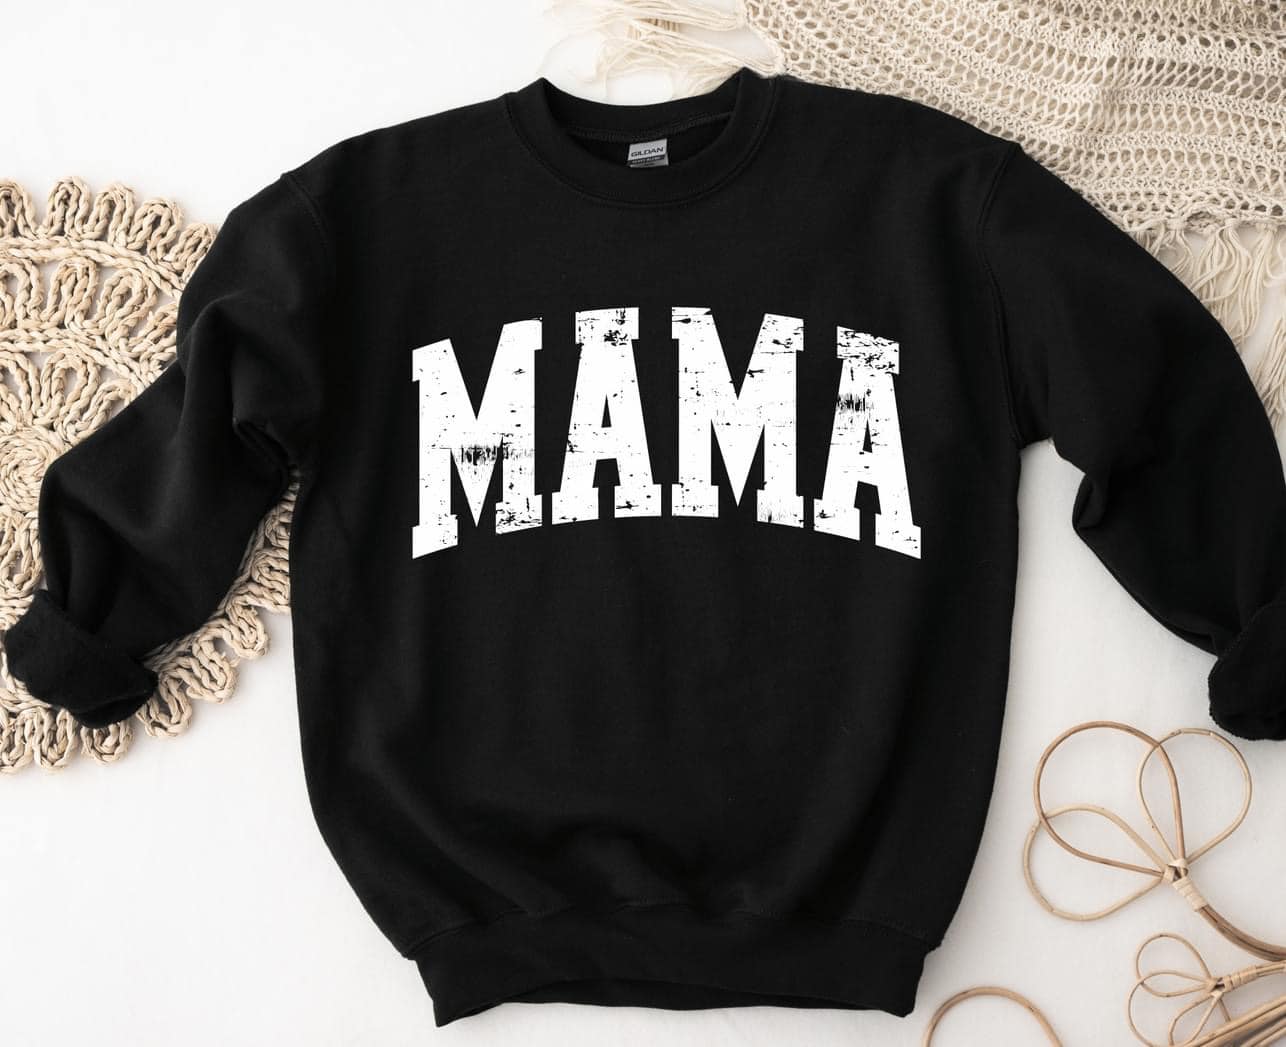 *SP* White Mama Grunge on Black Sweatshirt